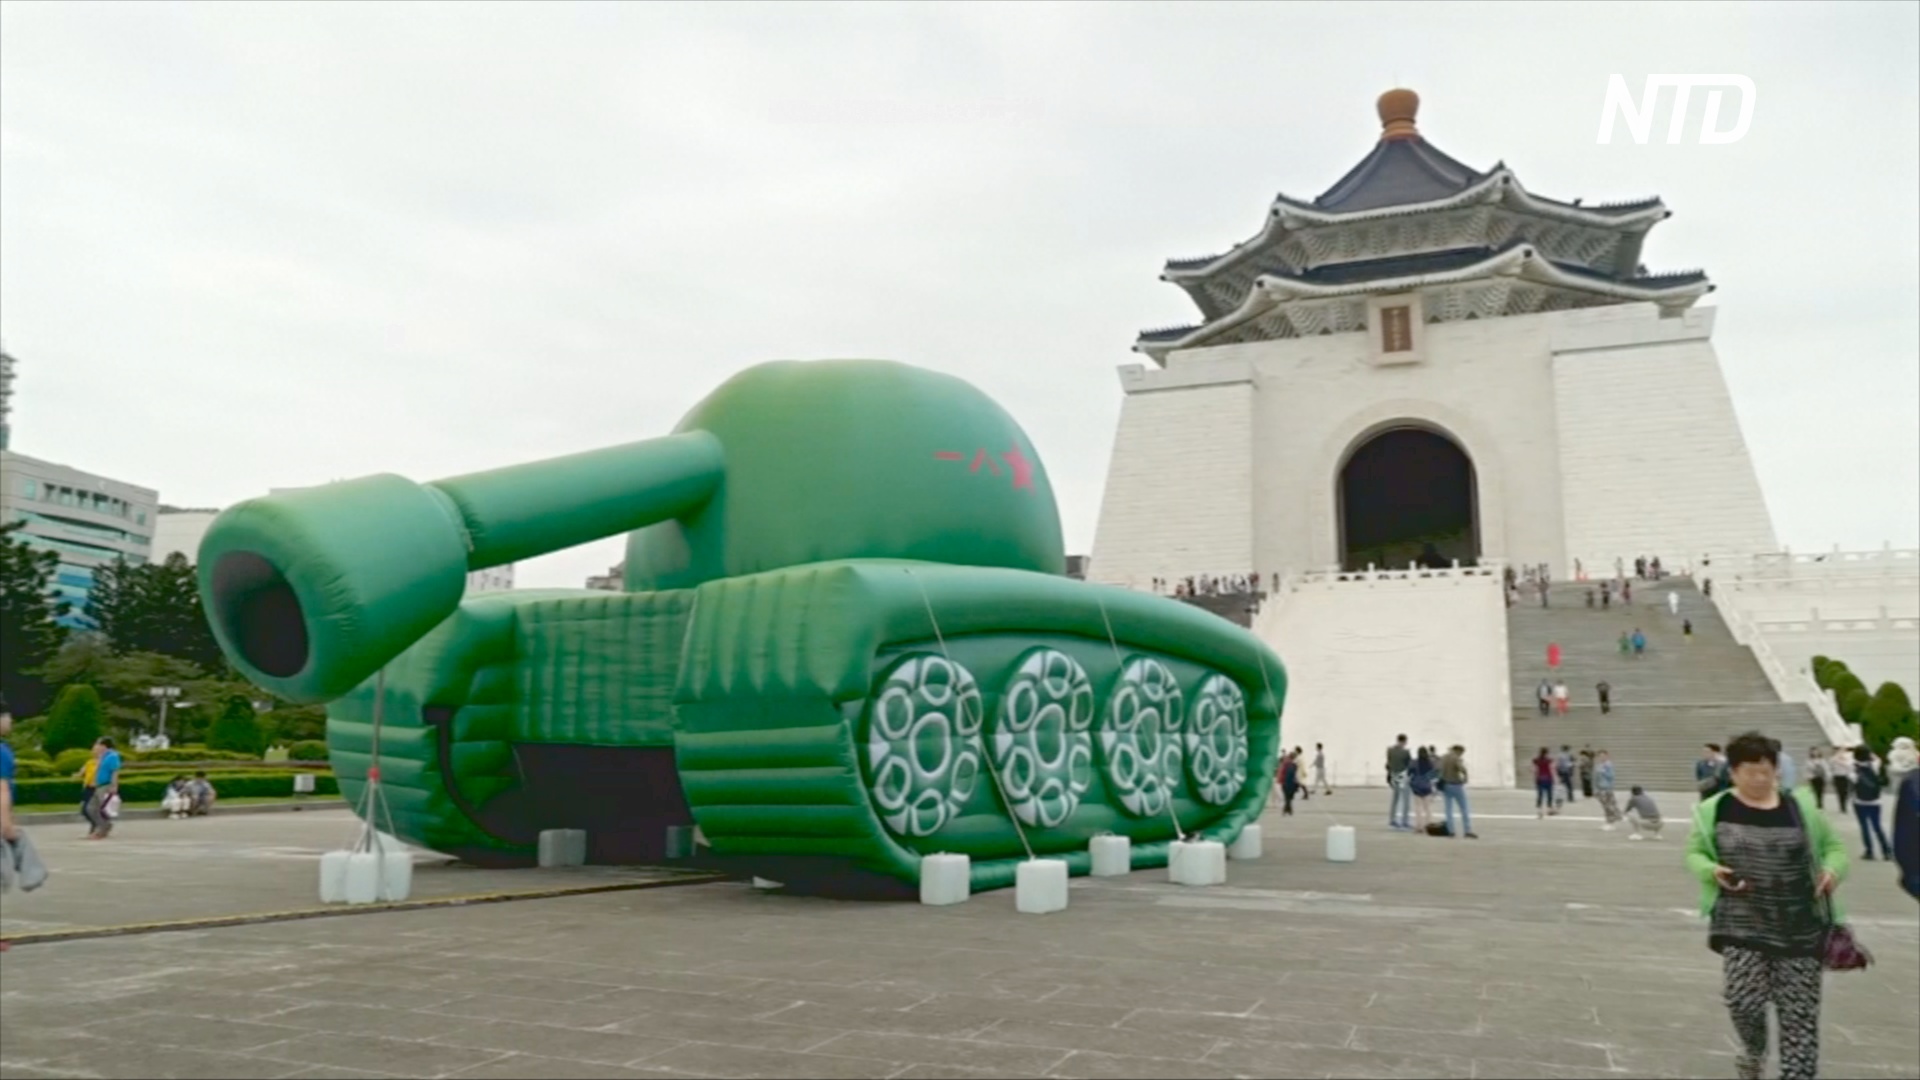 Инсталляция в виде неизвестного бунтаря появилась в центре Тайваня